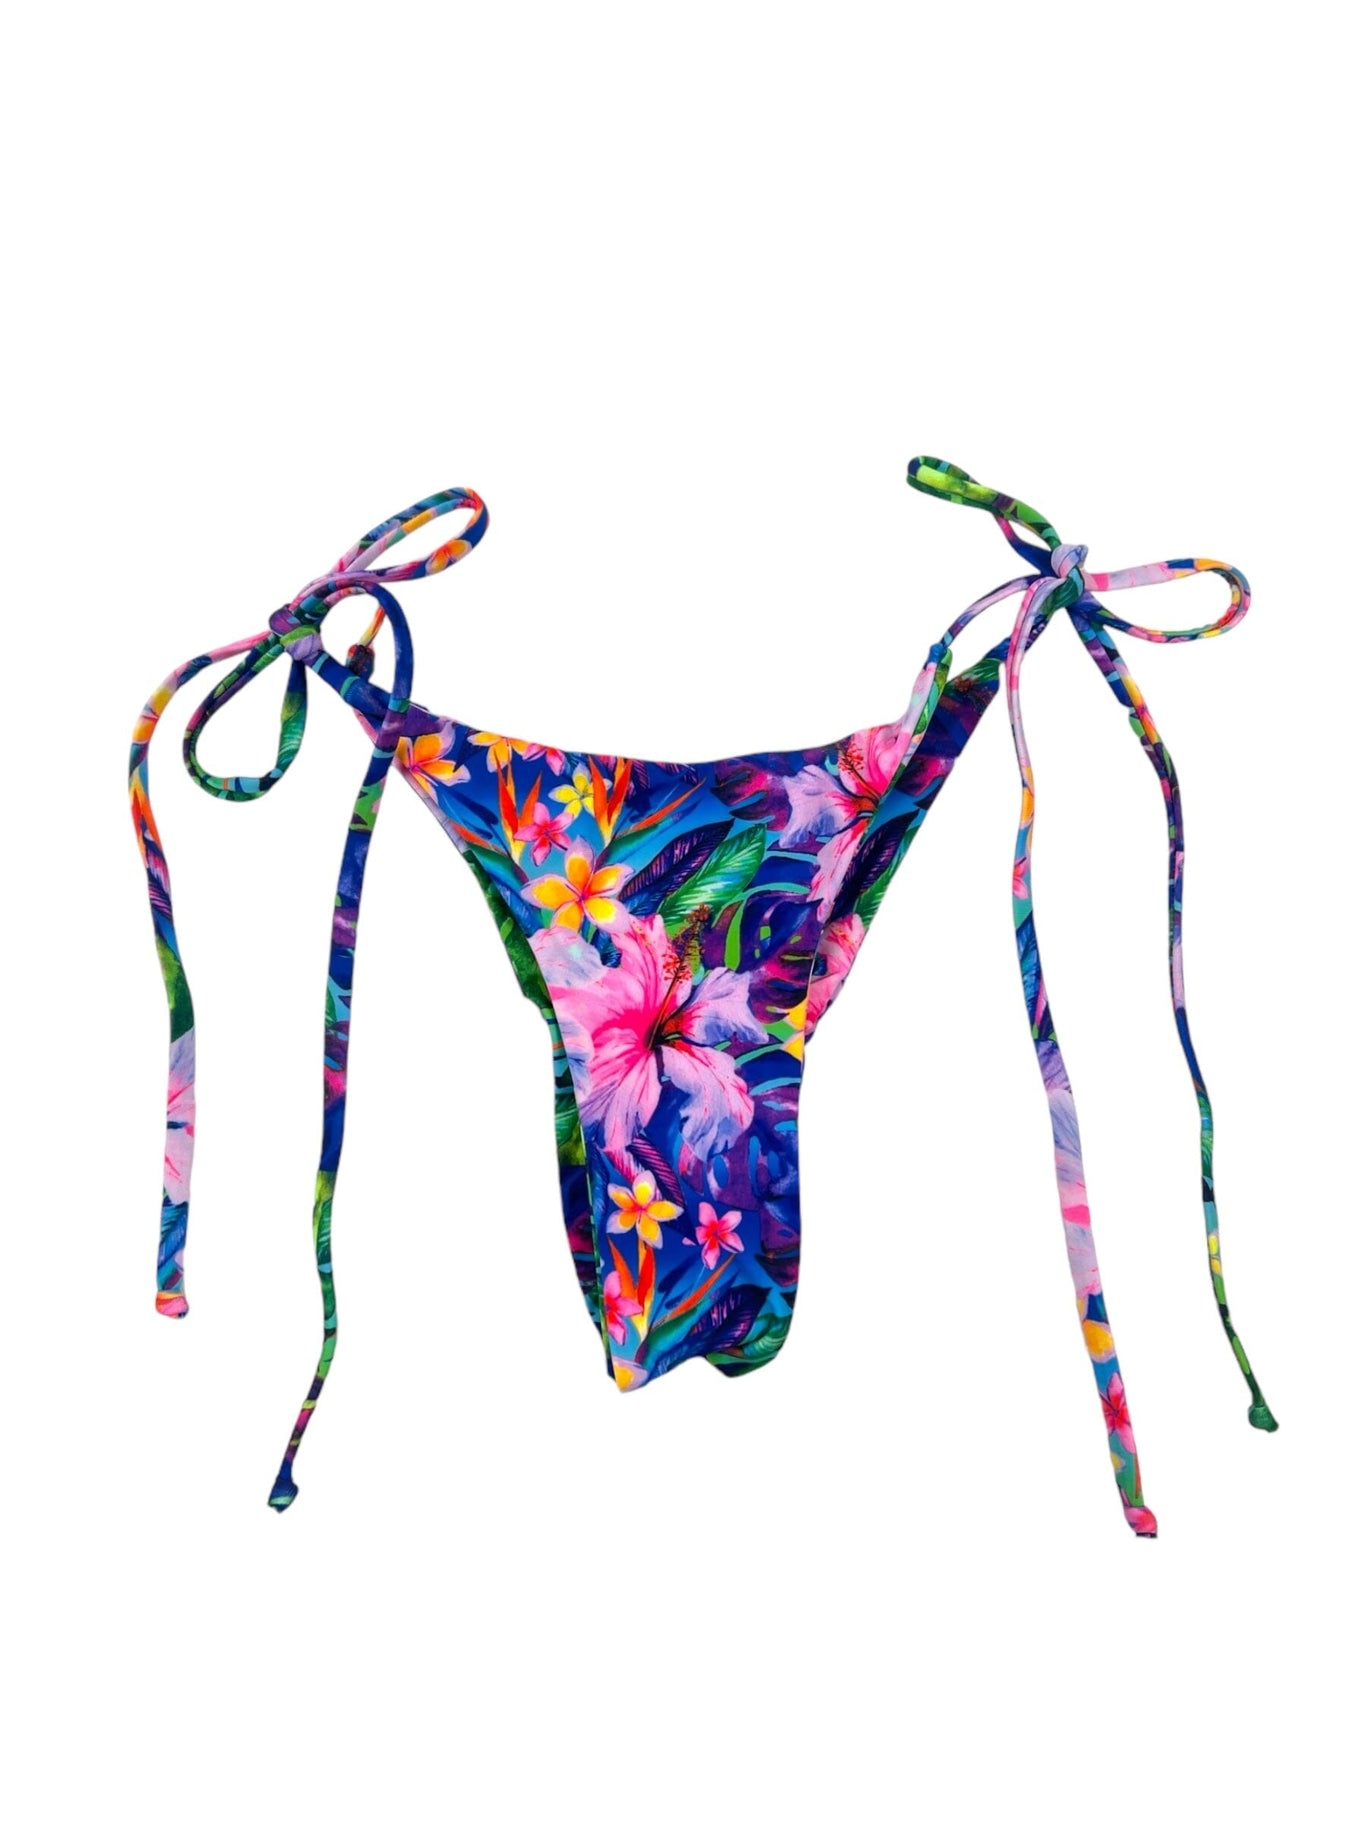 TROPICANA BLISS CHEEKY SCRUNCH BOTTOM - Berry Beachy Swimwear